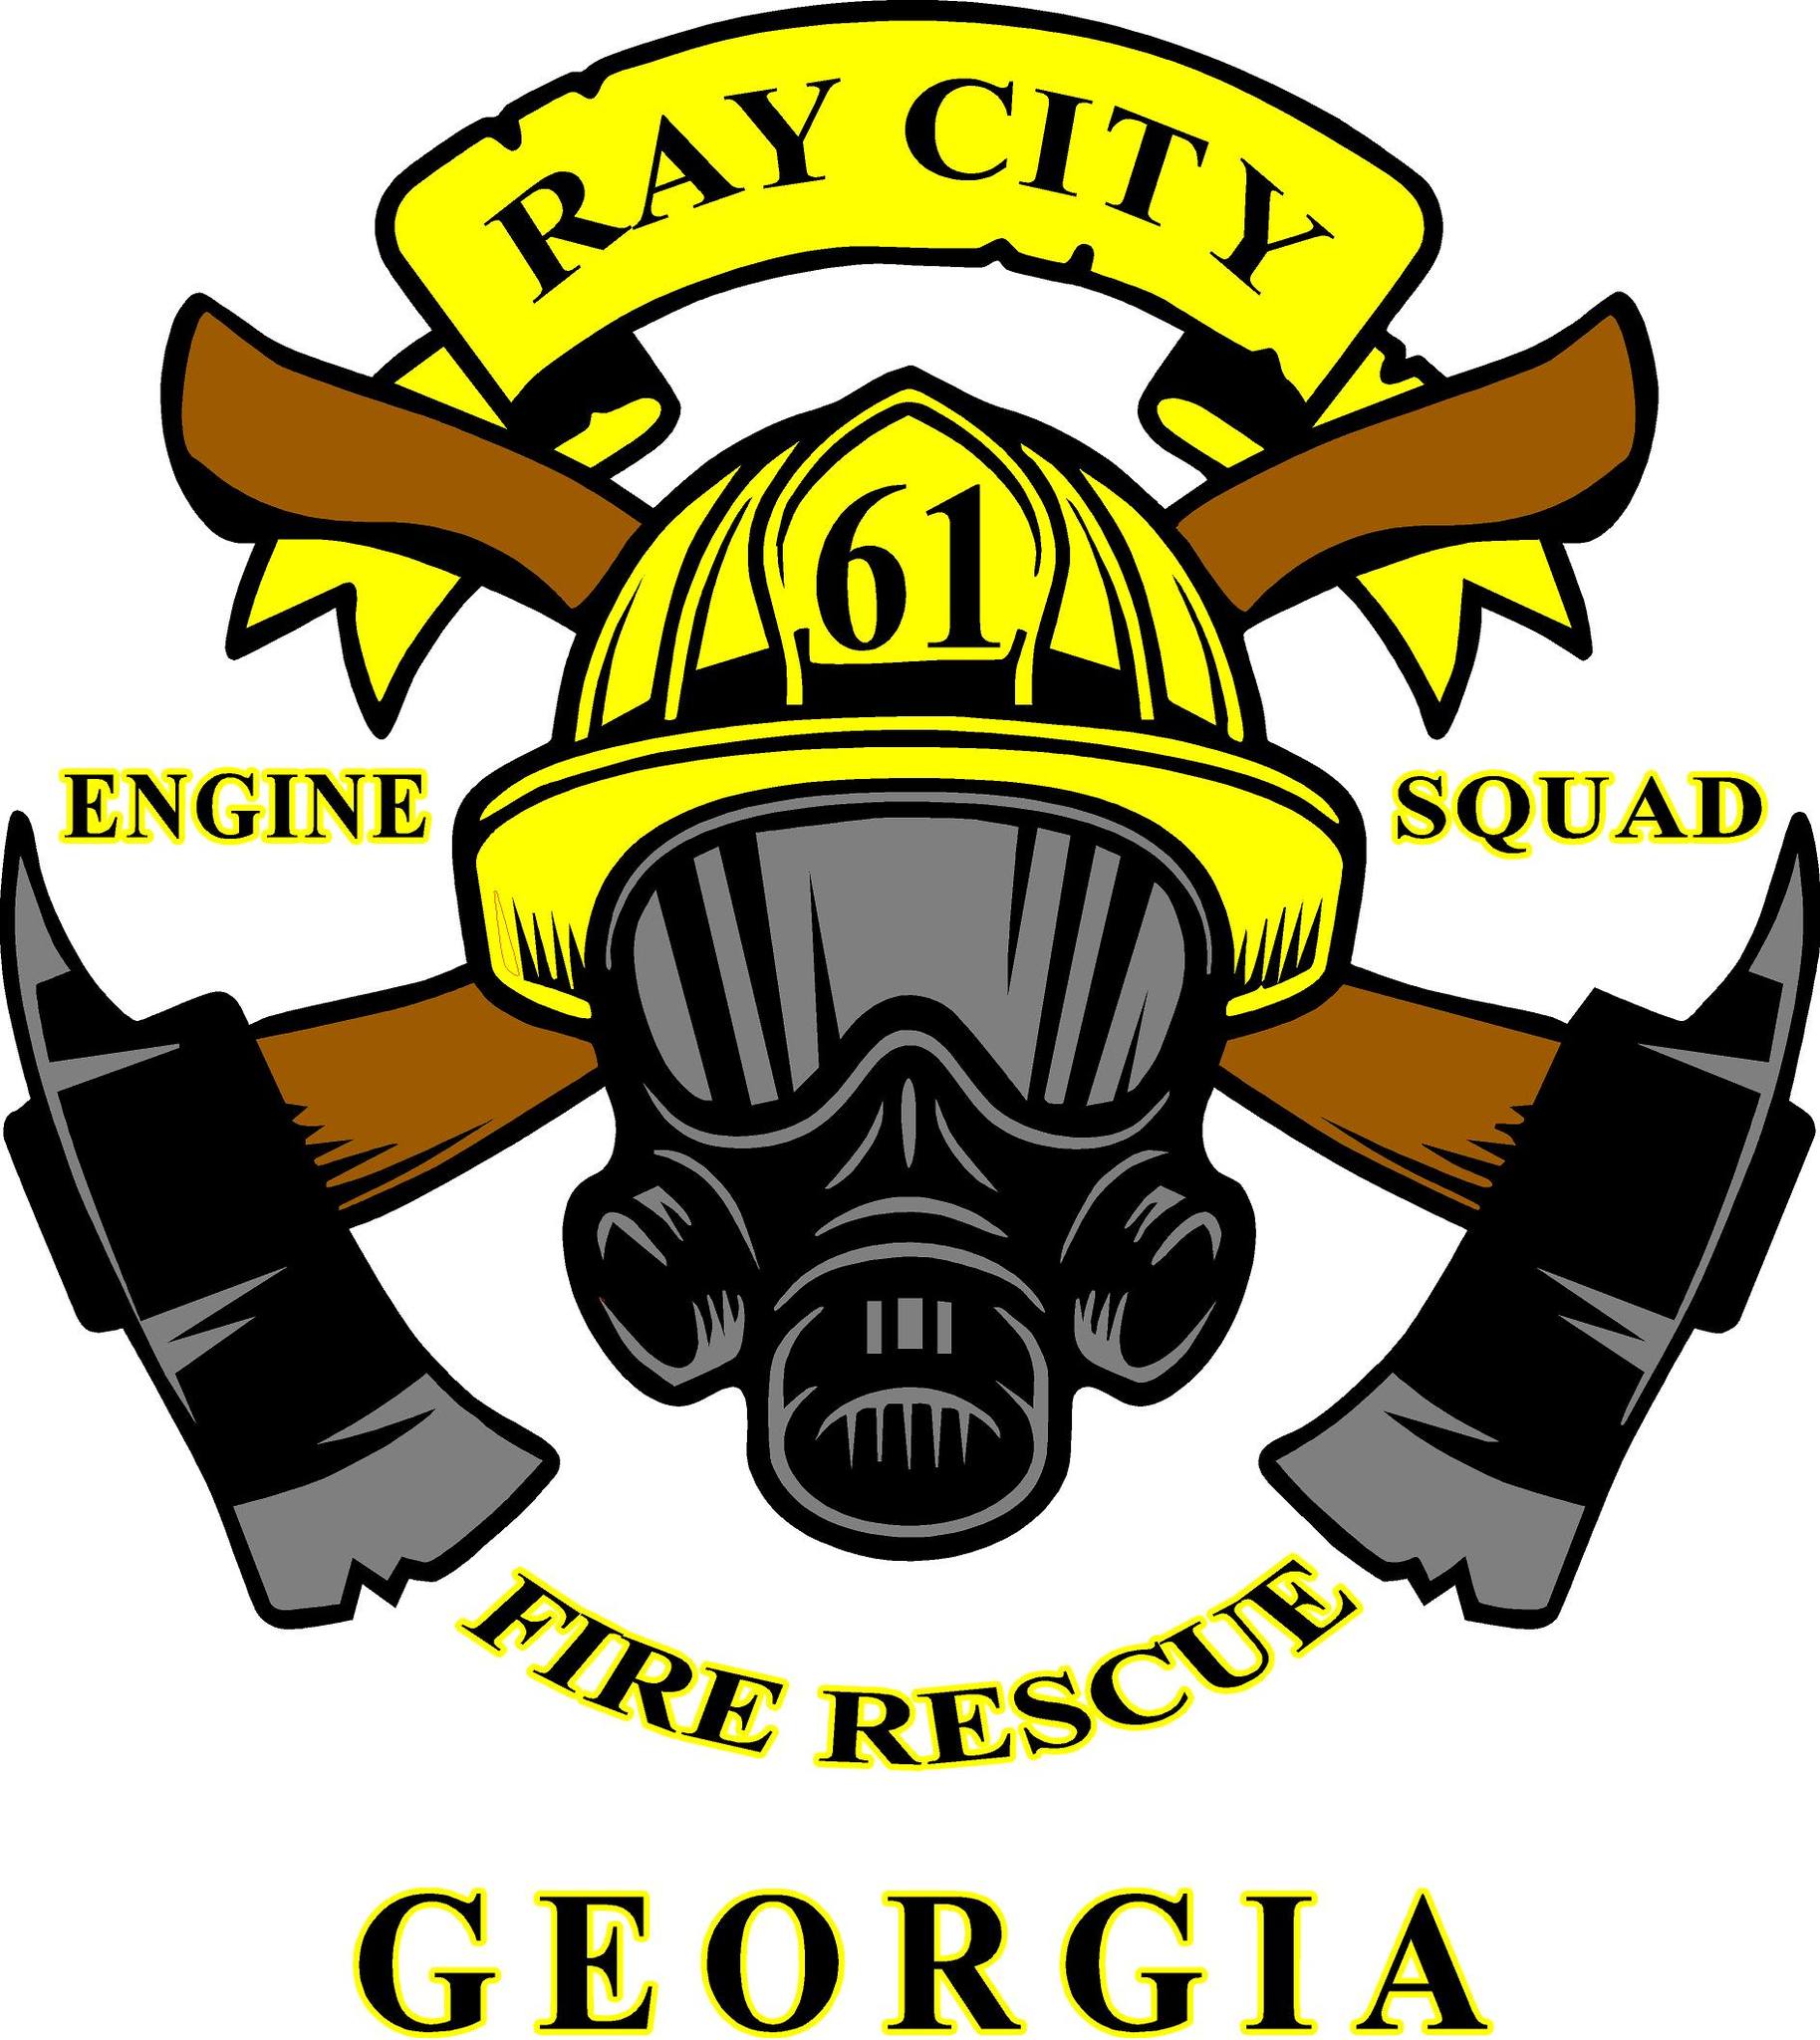 Ray City Volunteer Fire Department 8110 Main St, Ray City Georgia 31645